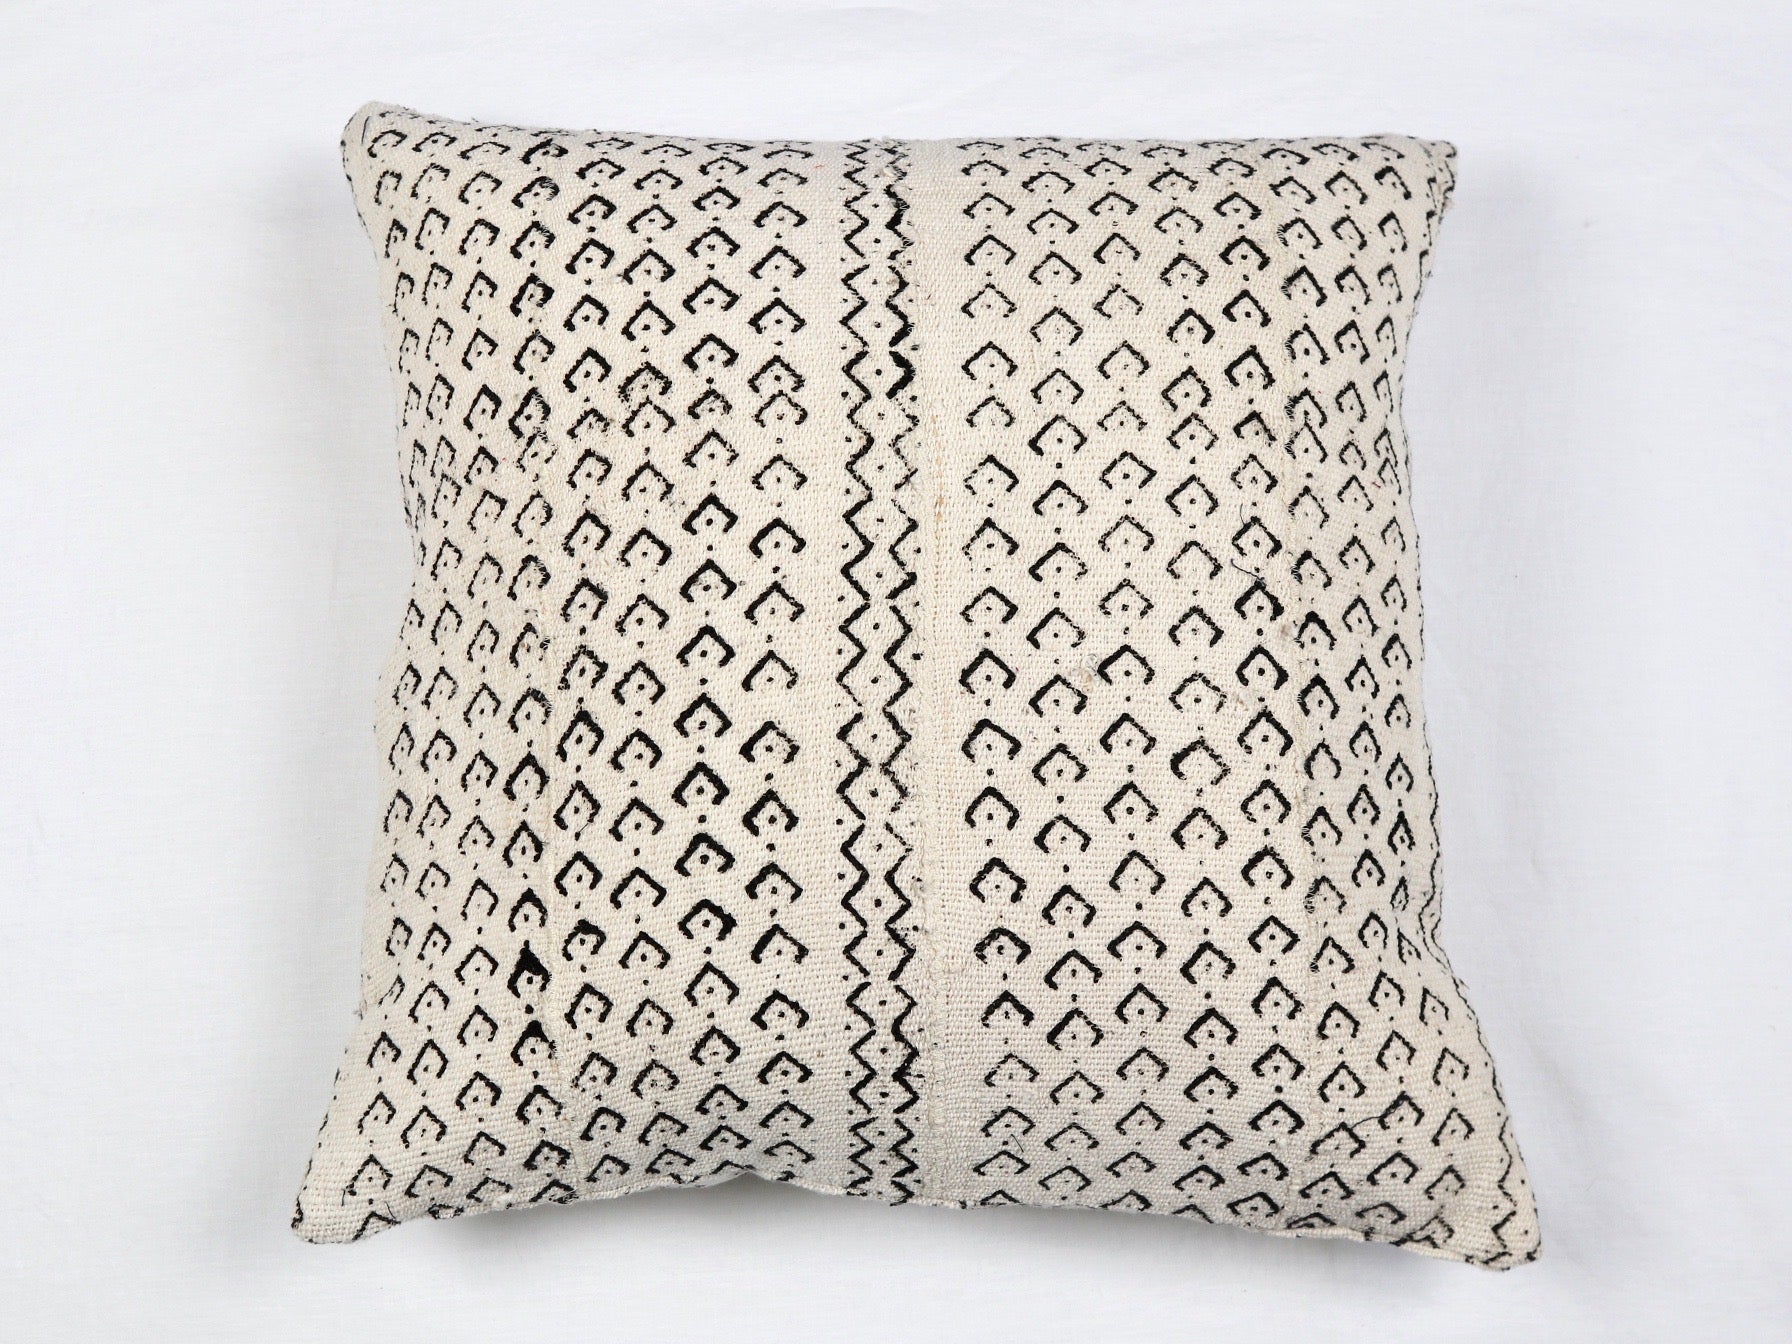 Mali Mudcloth Cushions